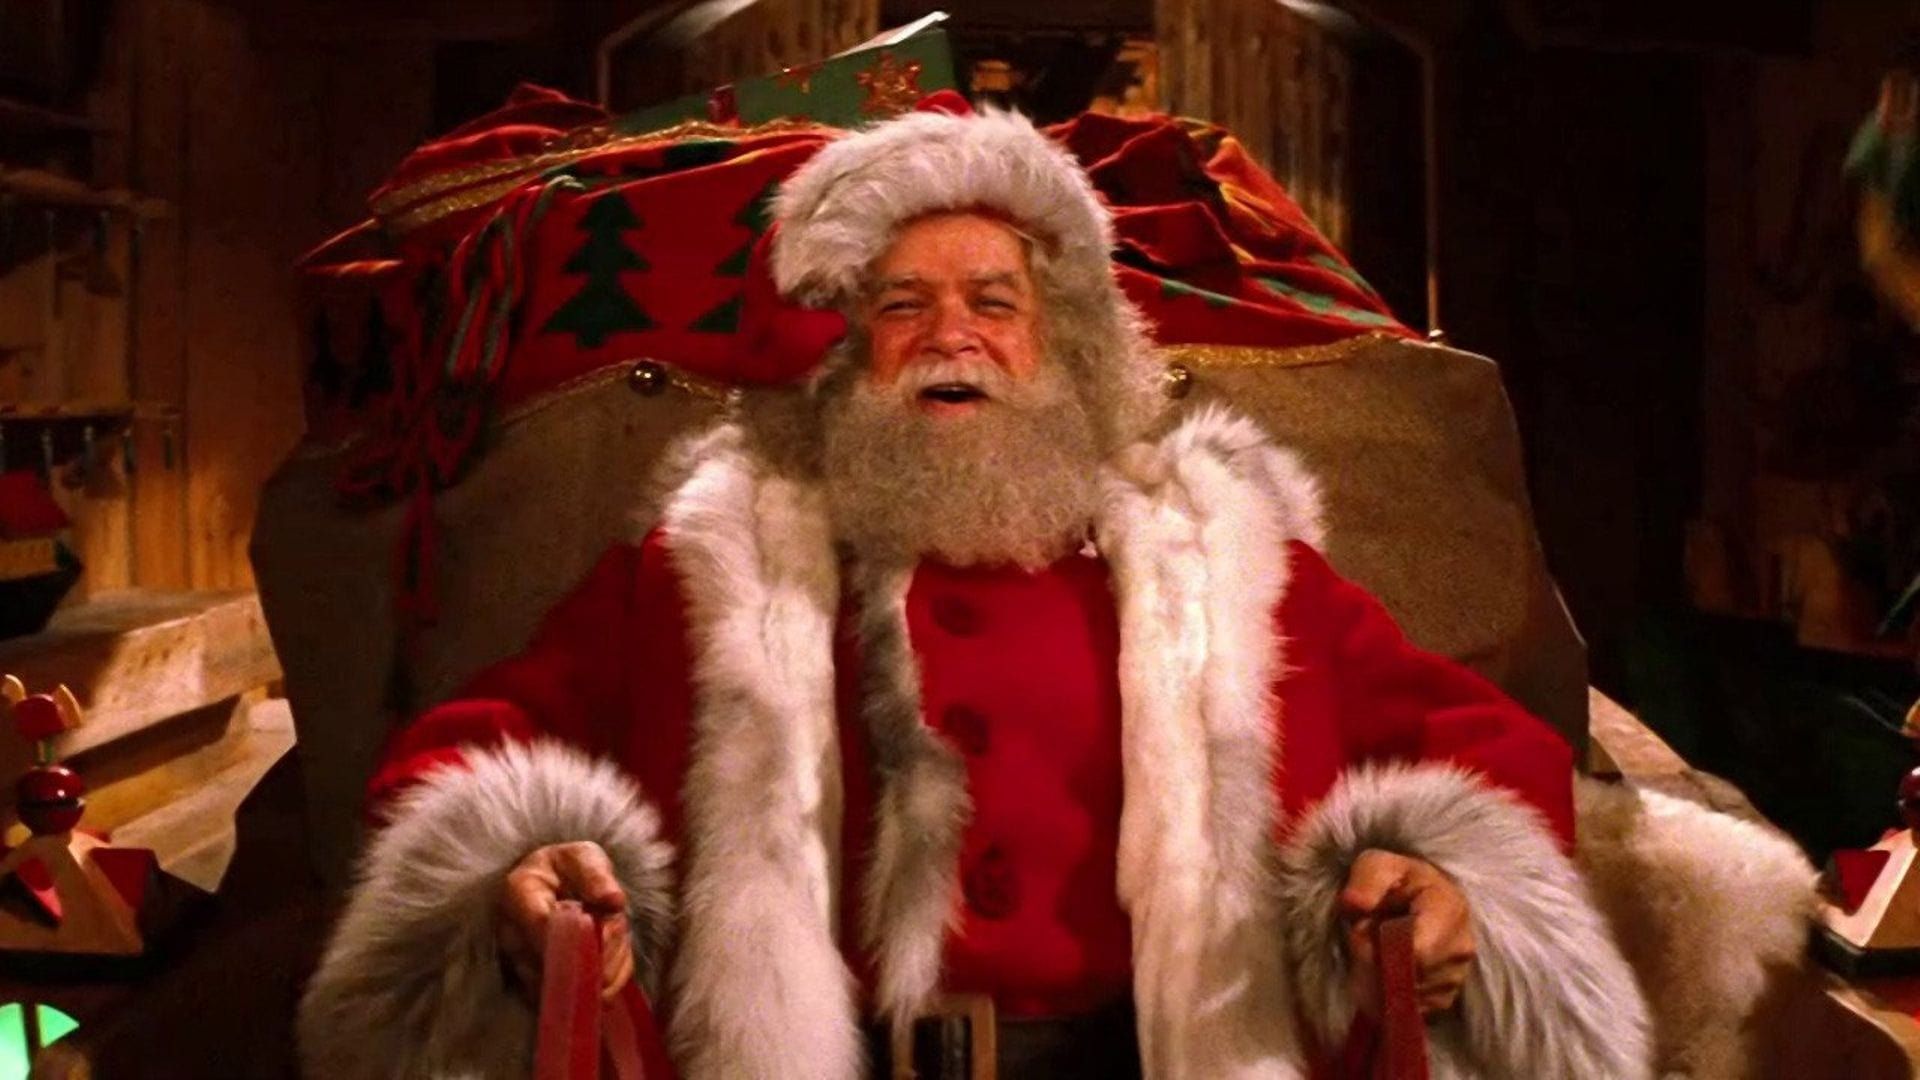 Santa Claus: The Movie background